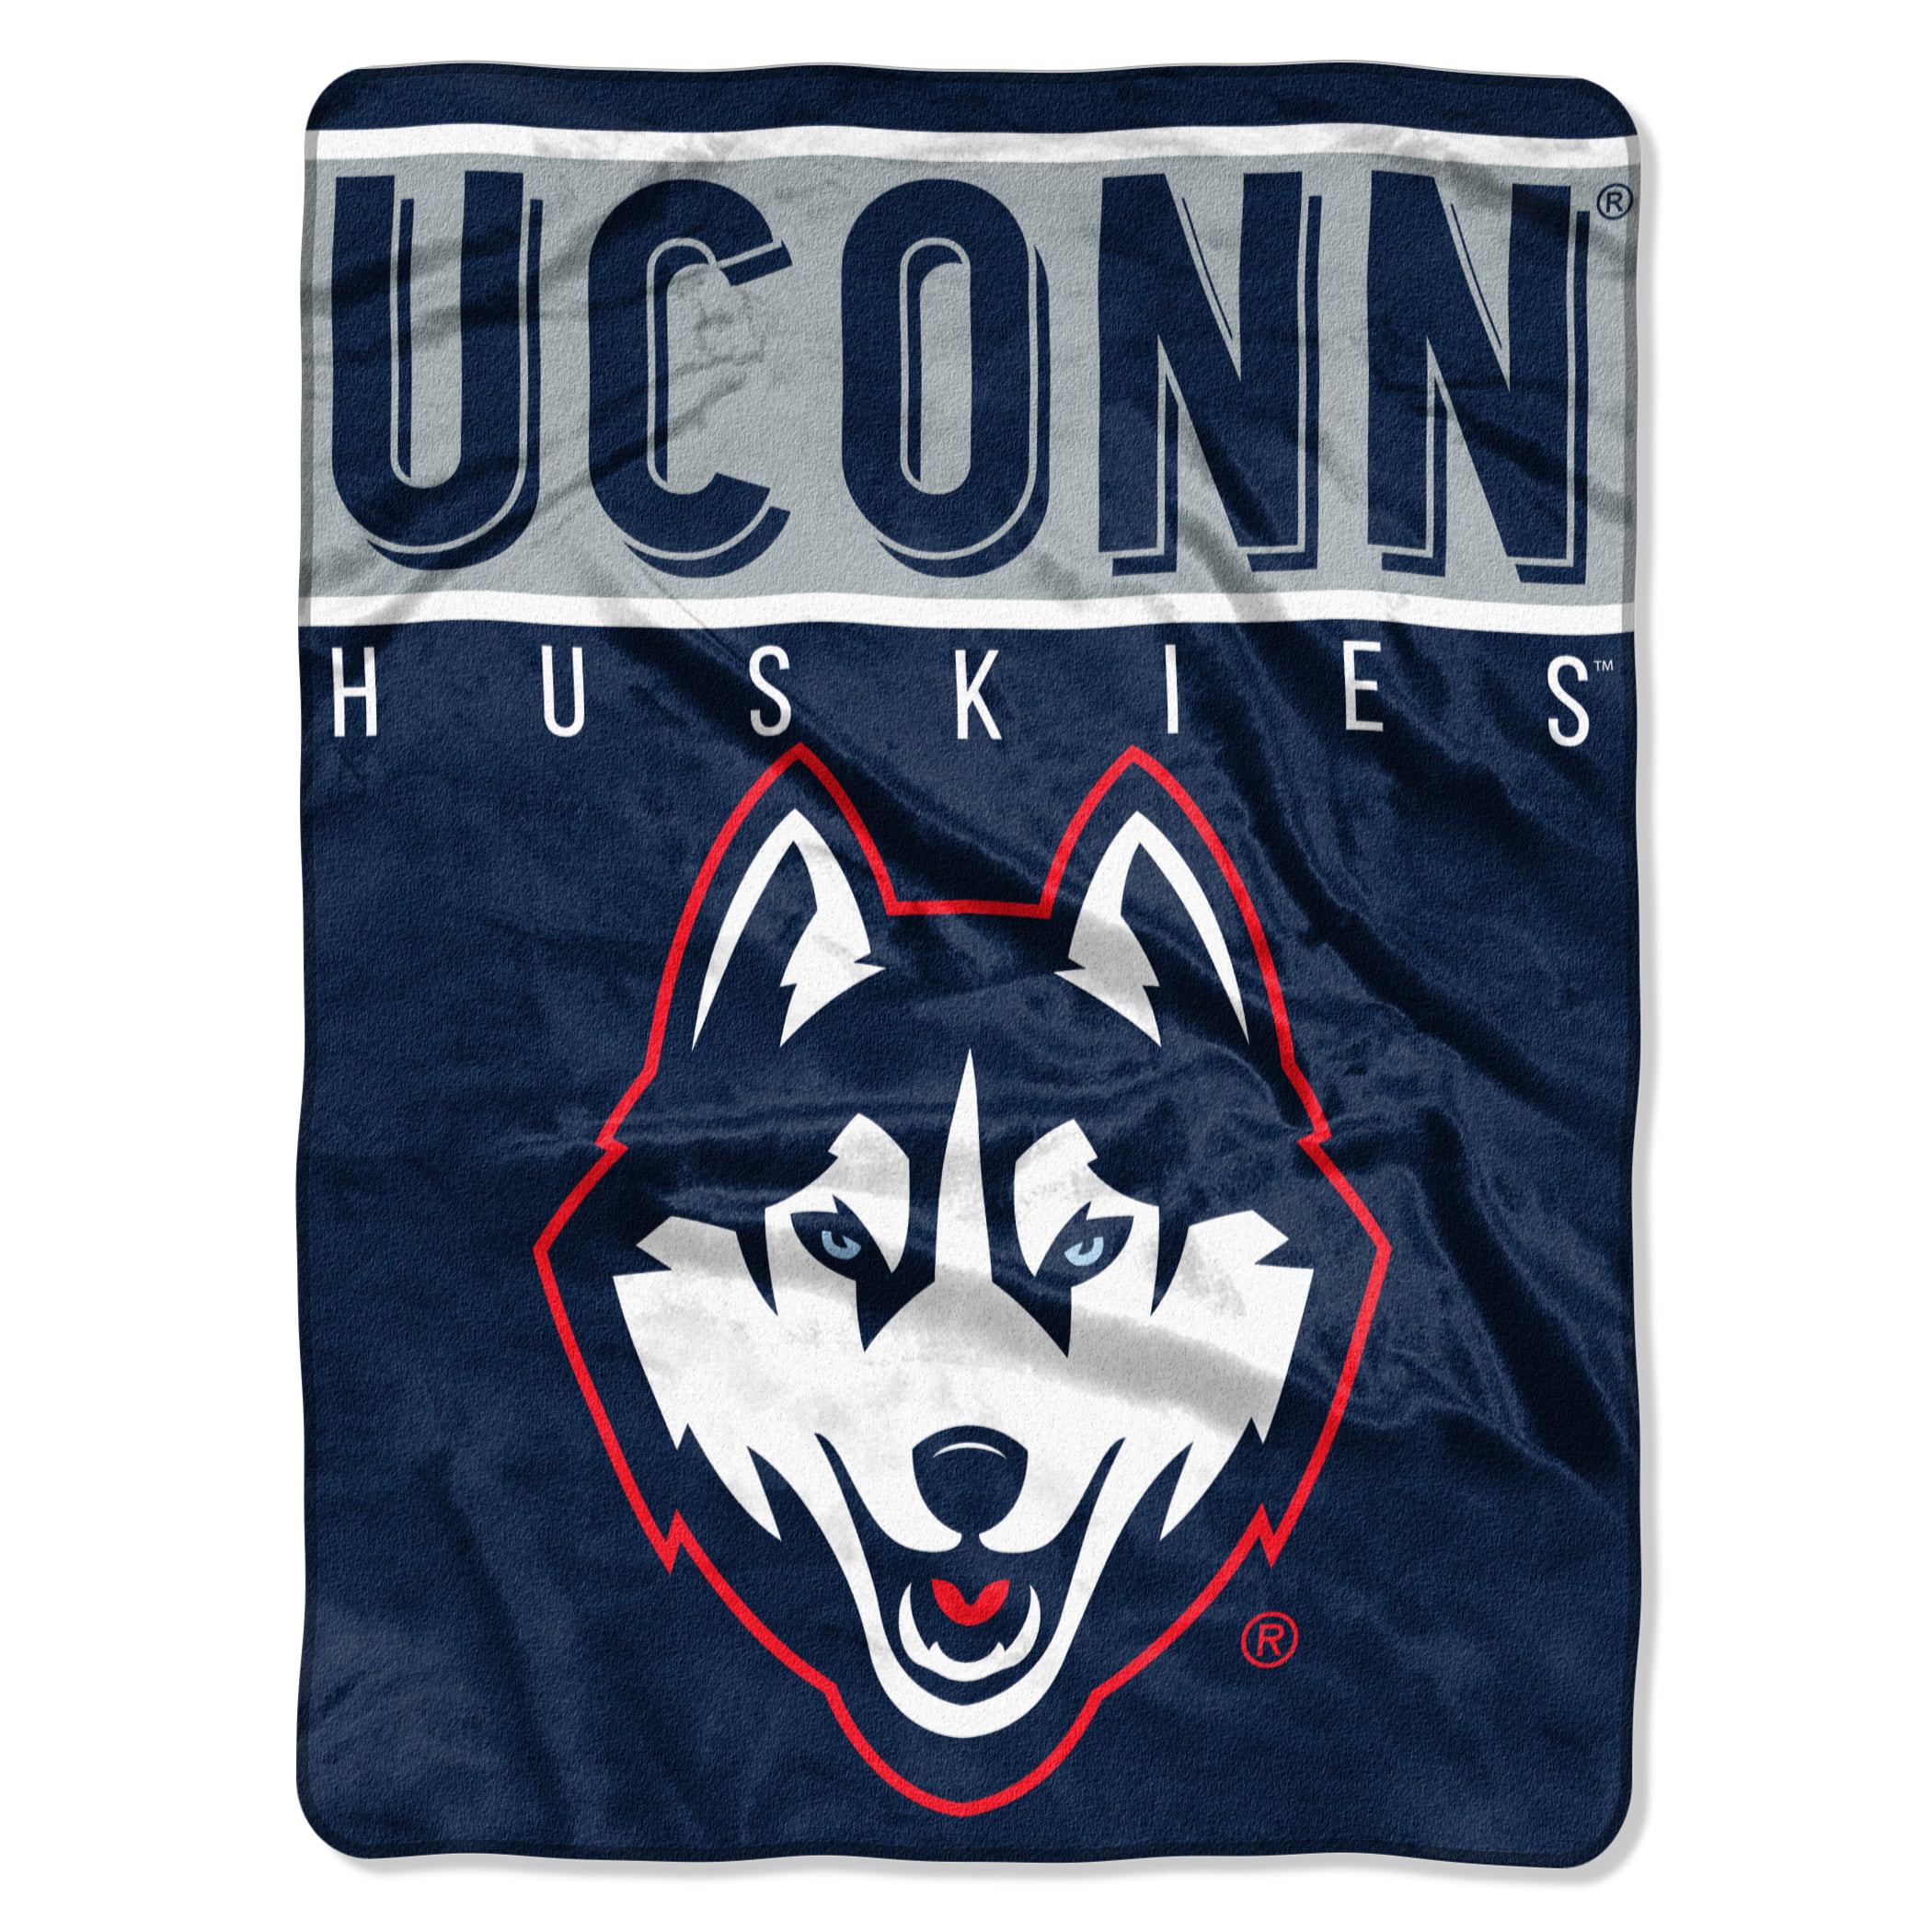 Northwest University of Connecticut UCONN Huskies 50x60 inch Blanket Throw 